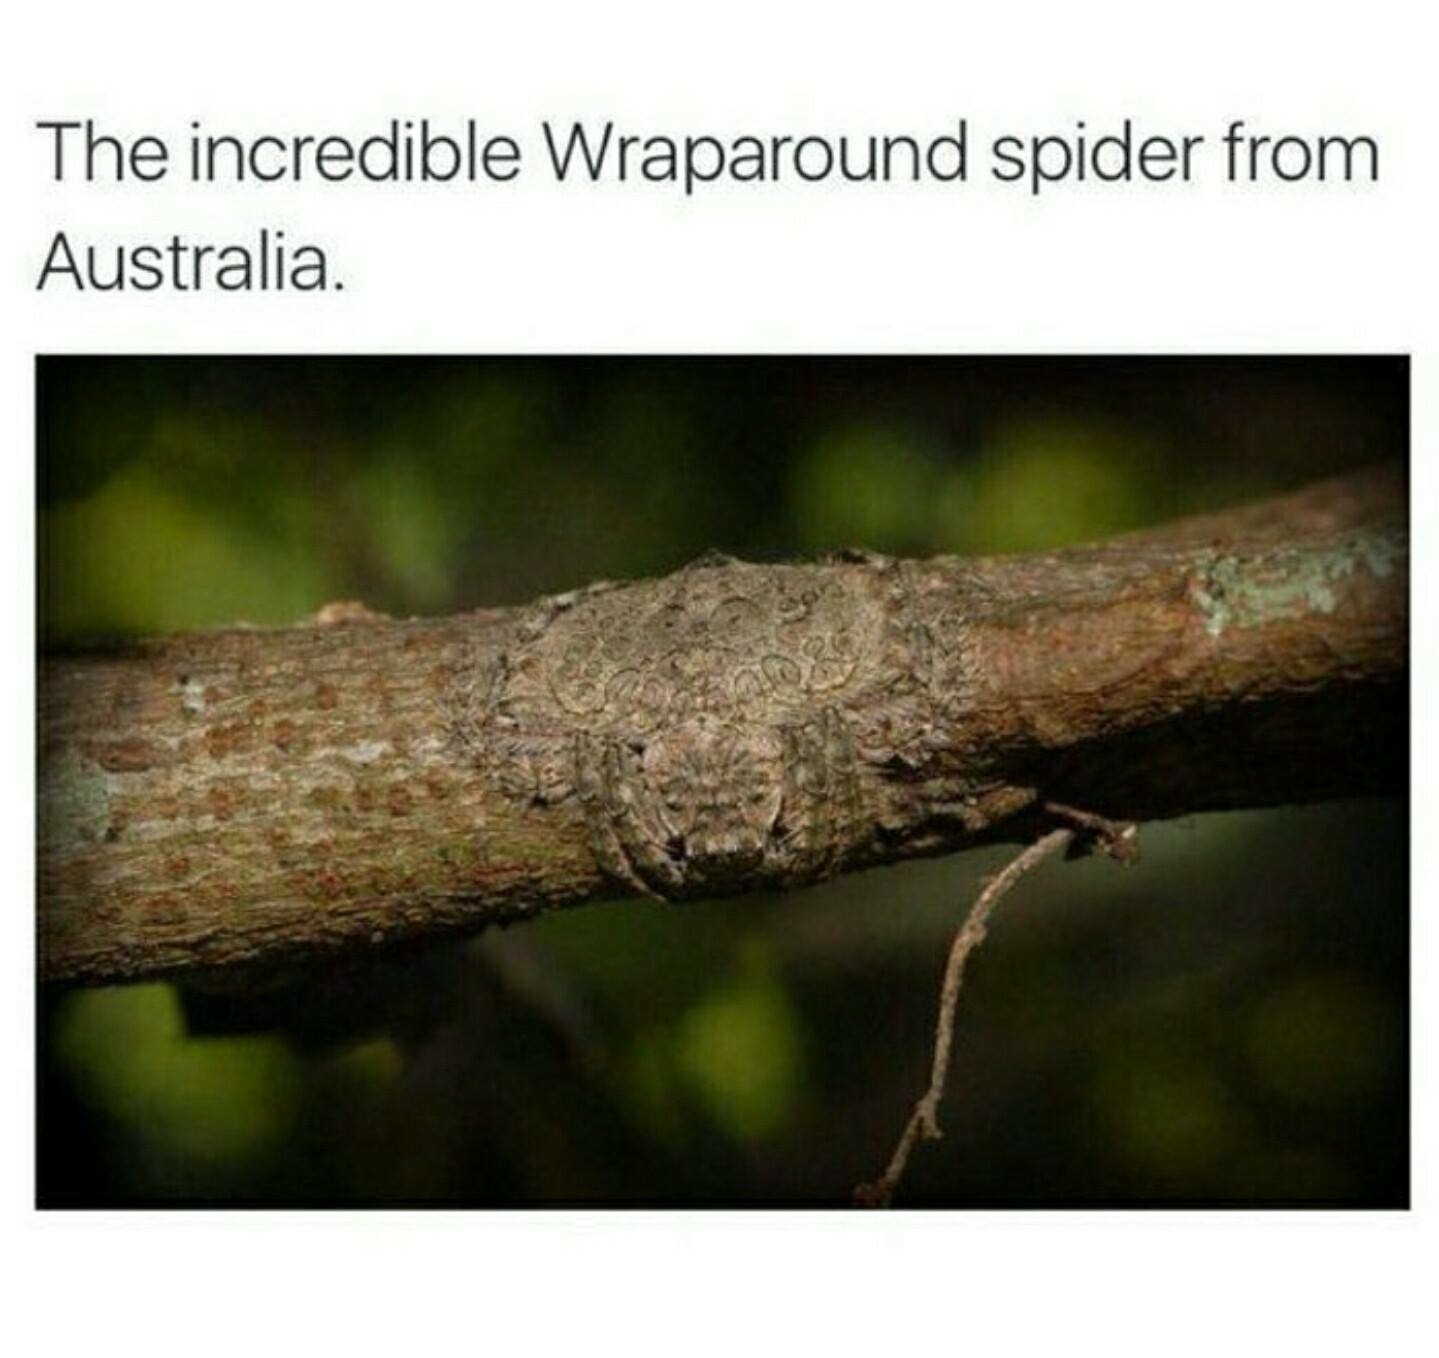 wrap around spider meme - The incredible Wraparound spider from Australia.